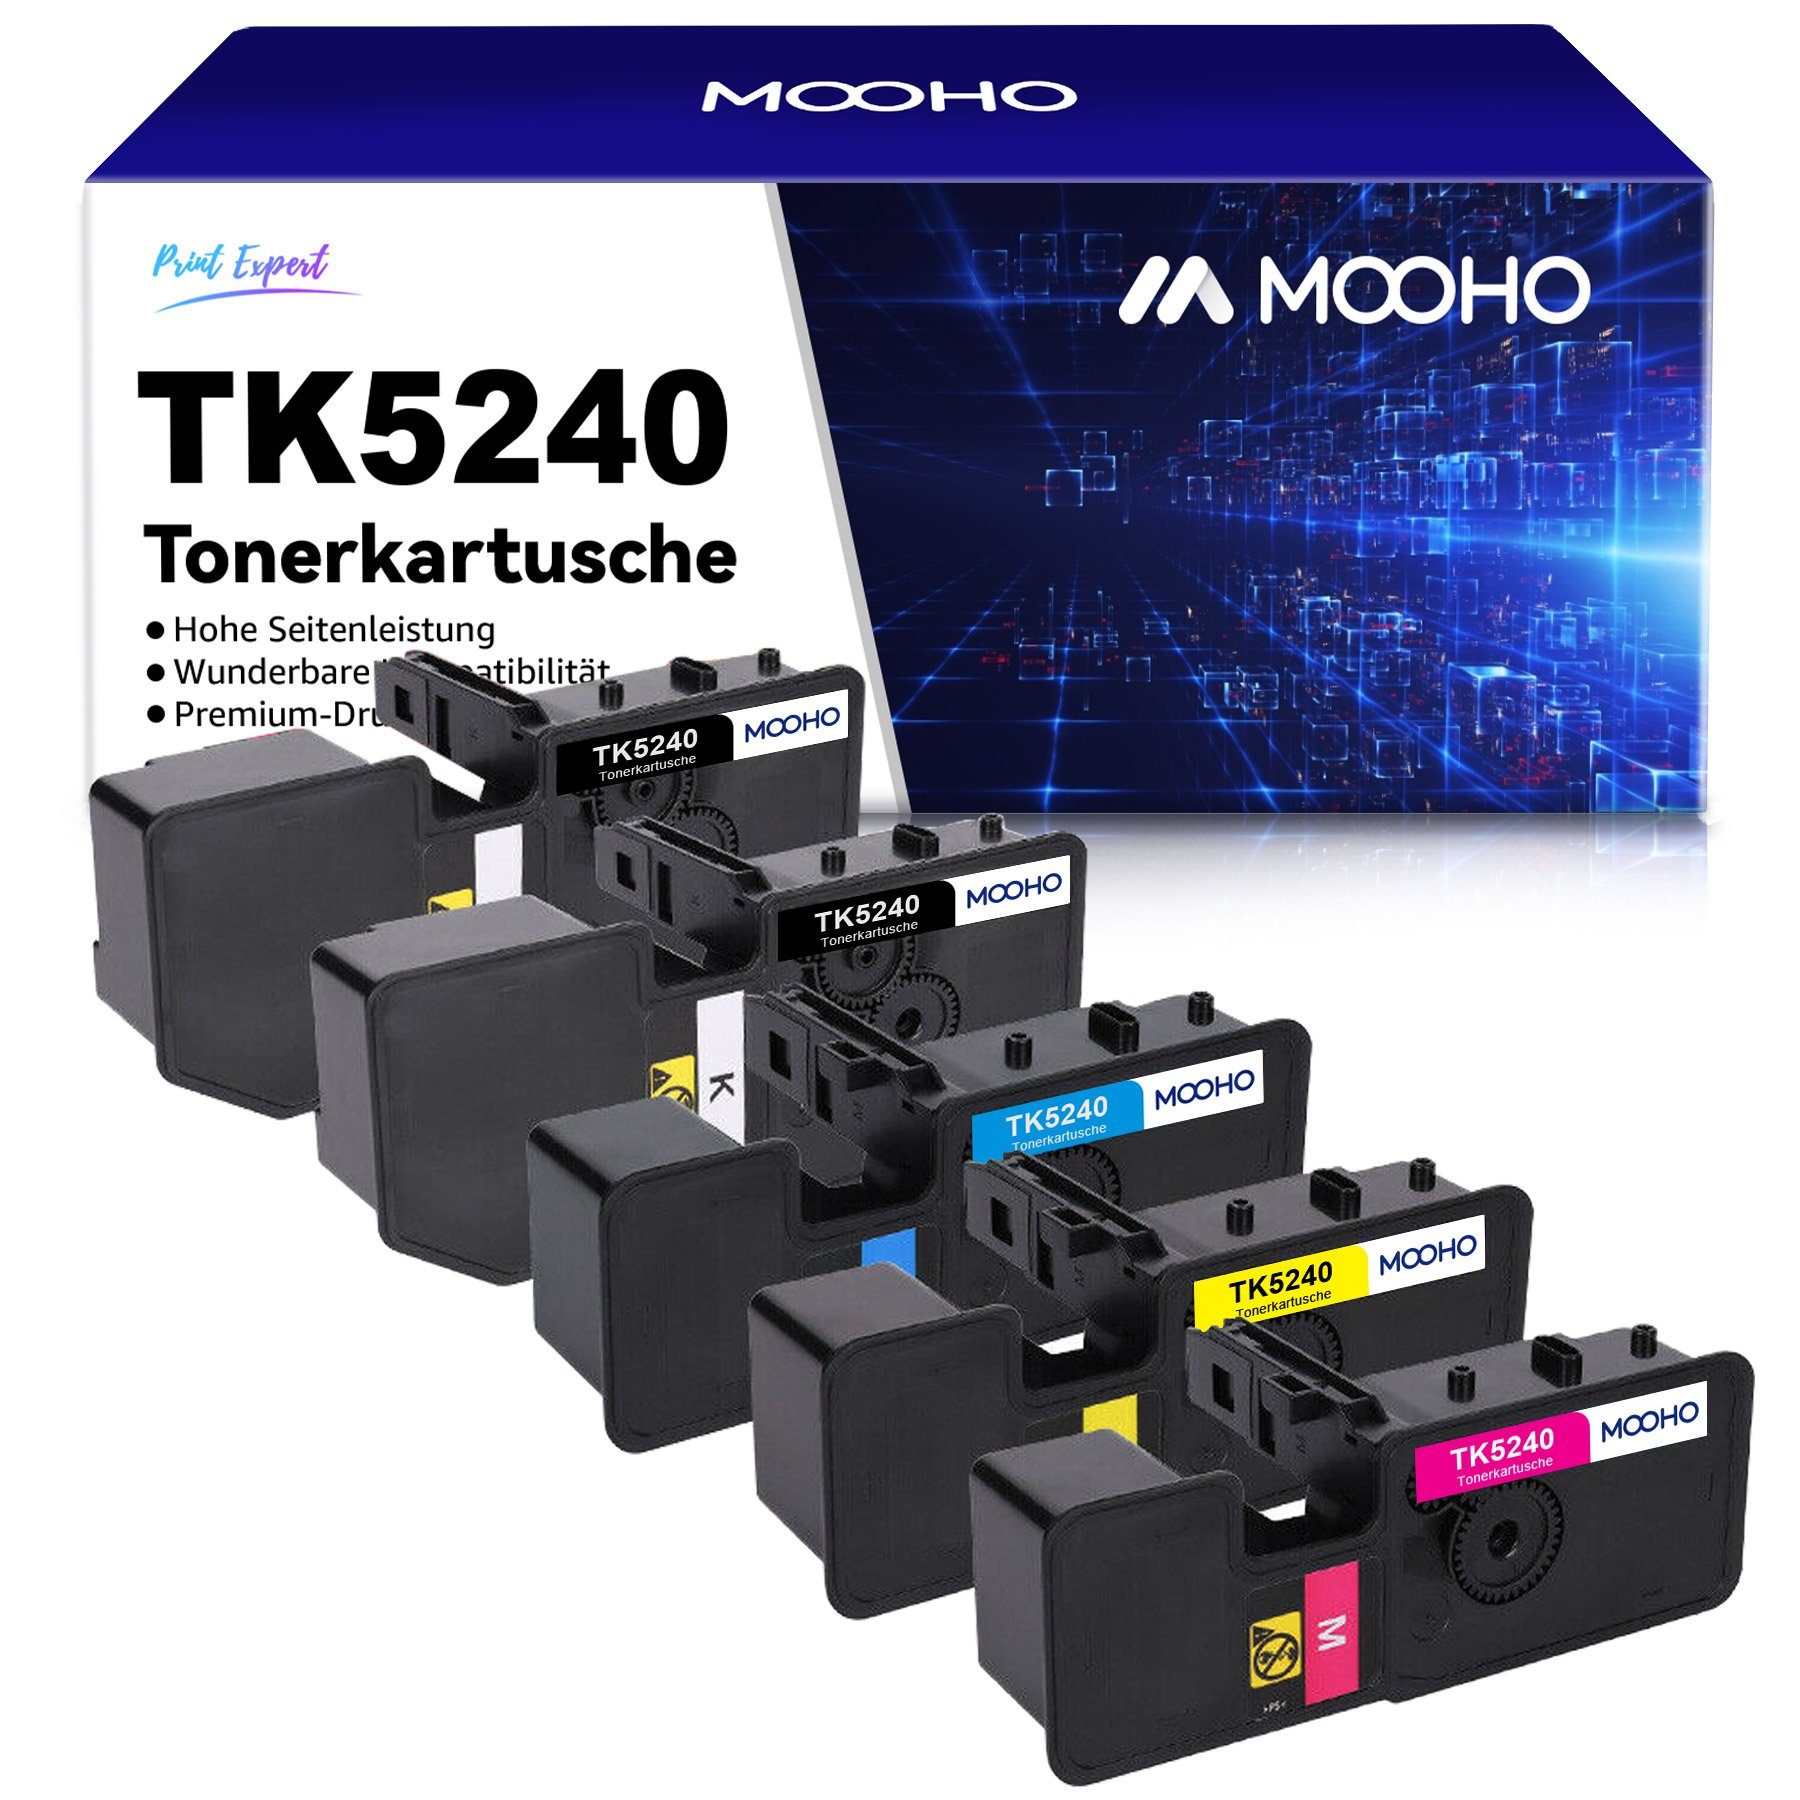 MOOHO Tonerkartusche TK5240 TK 5420 TK-5240, für ECOSYS P5026cdw M5526cdw M5526cdn